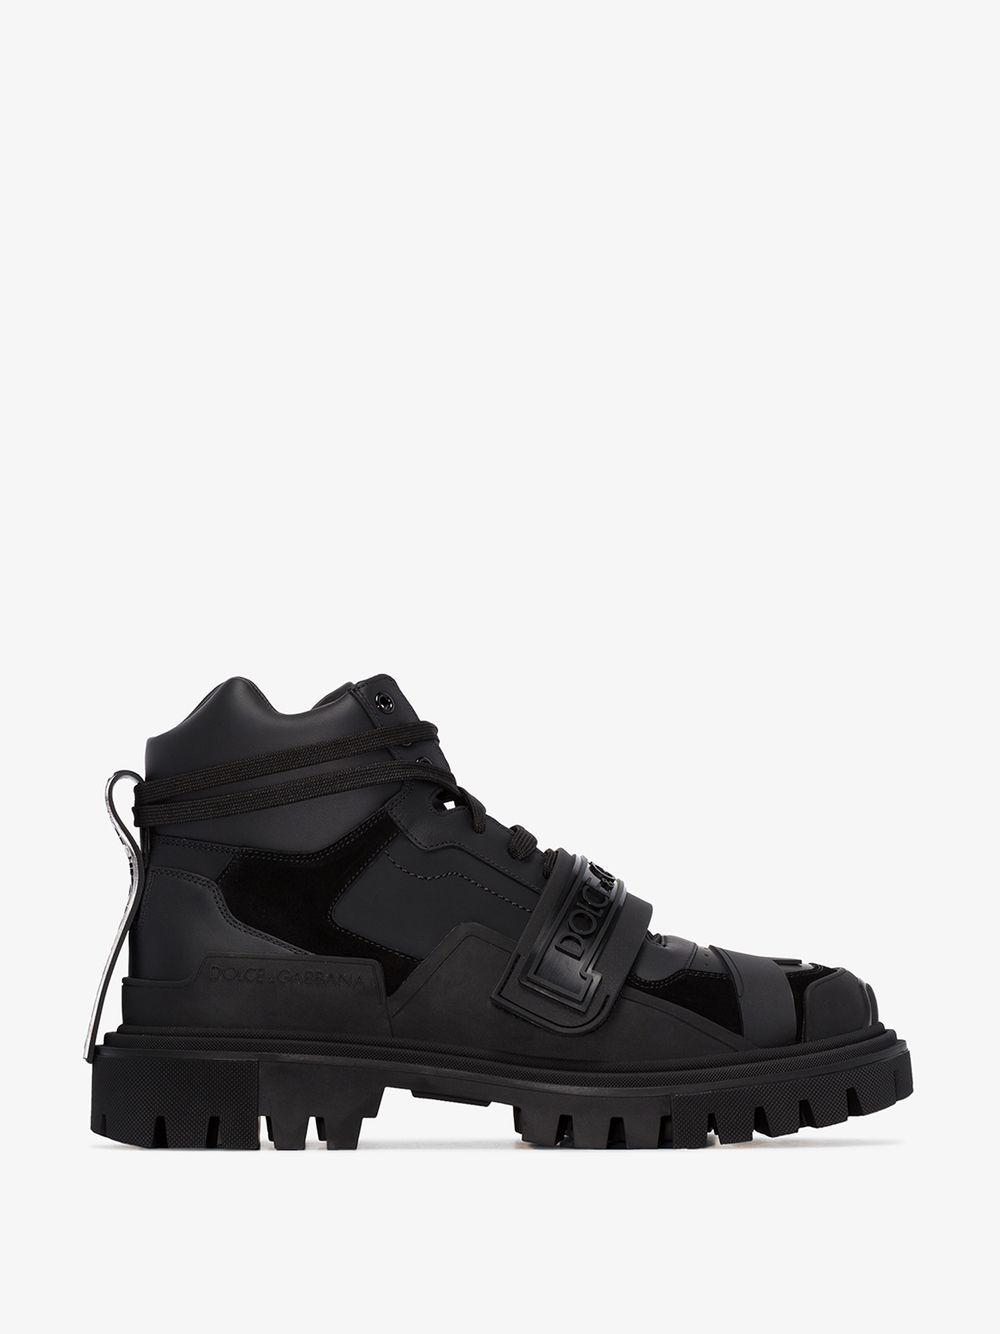 & Gabbana Panelled Logo Hiking Boots in Black for Men | Lyst